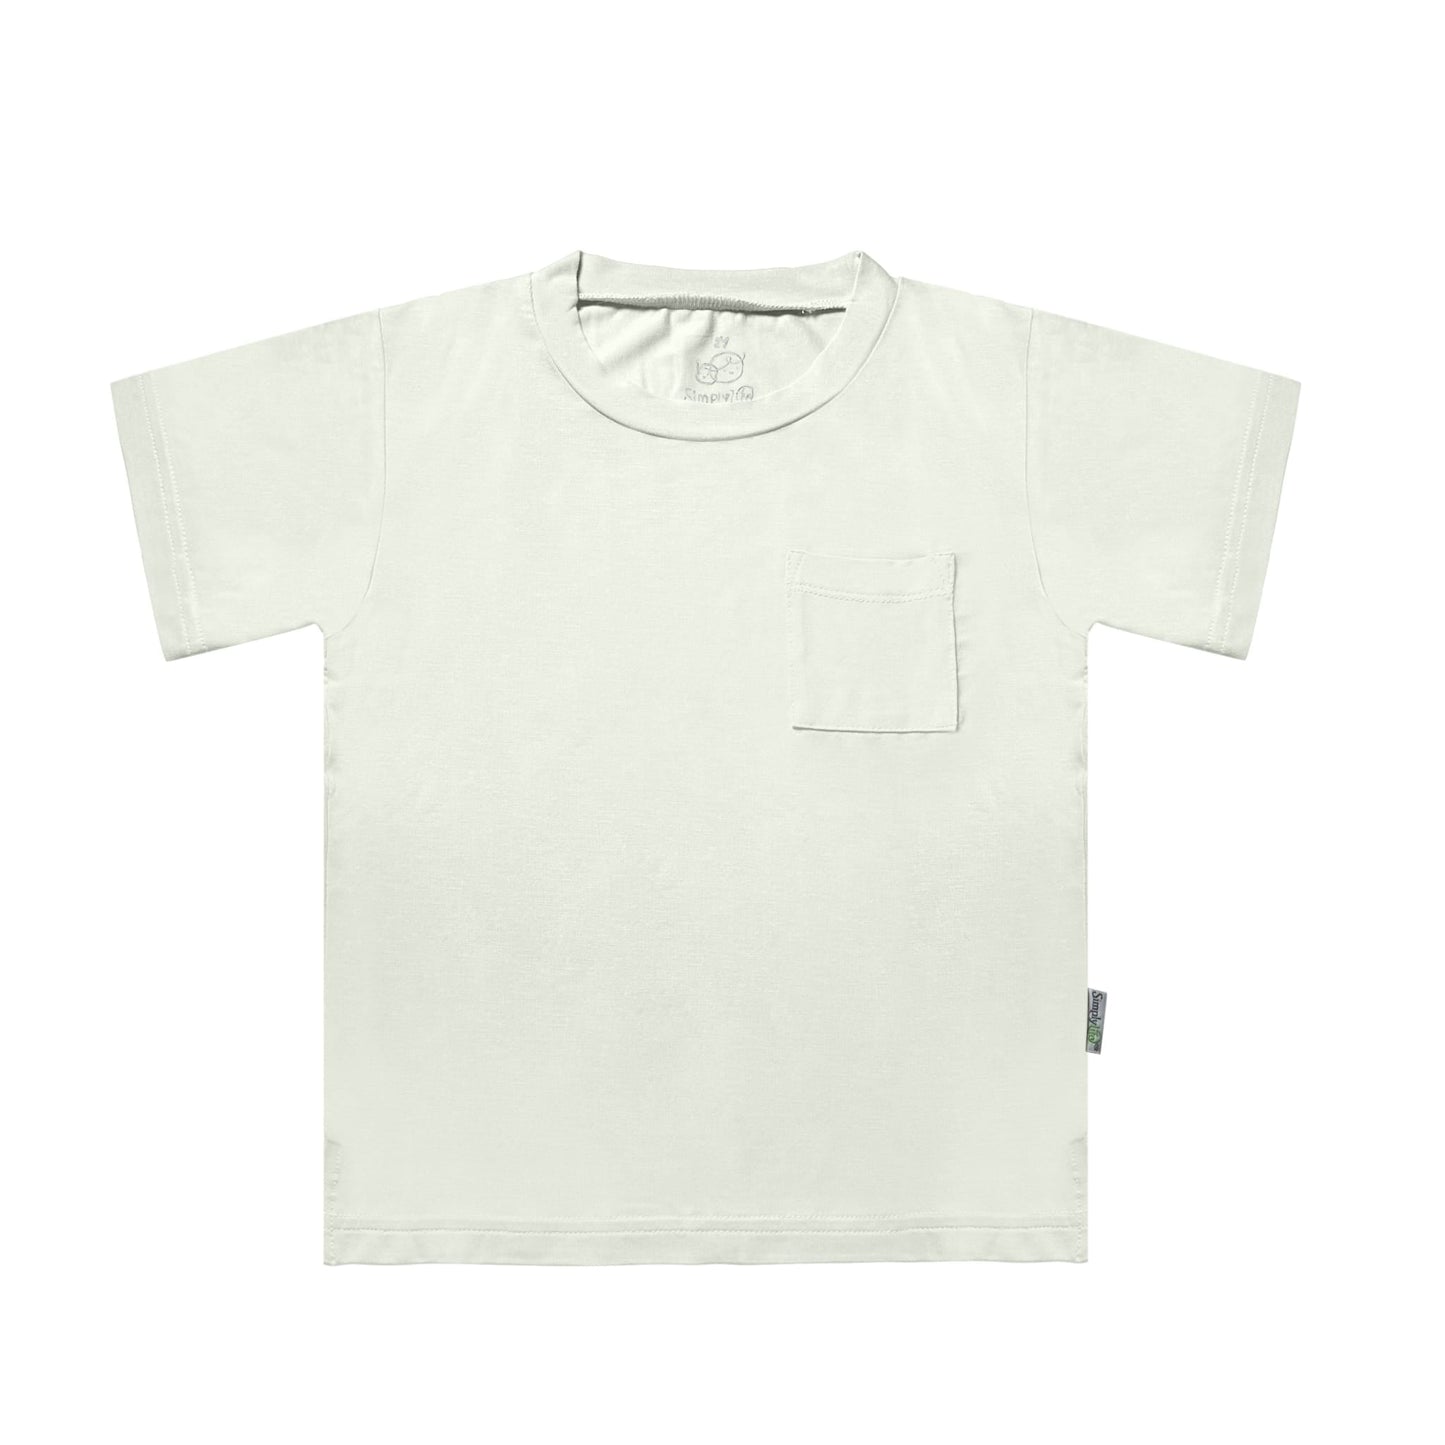 Kids Basic Tee with pocket (White) - TENCEL™ Modal